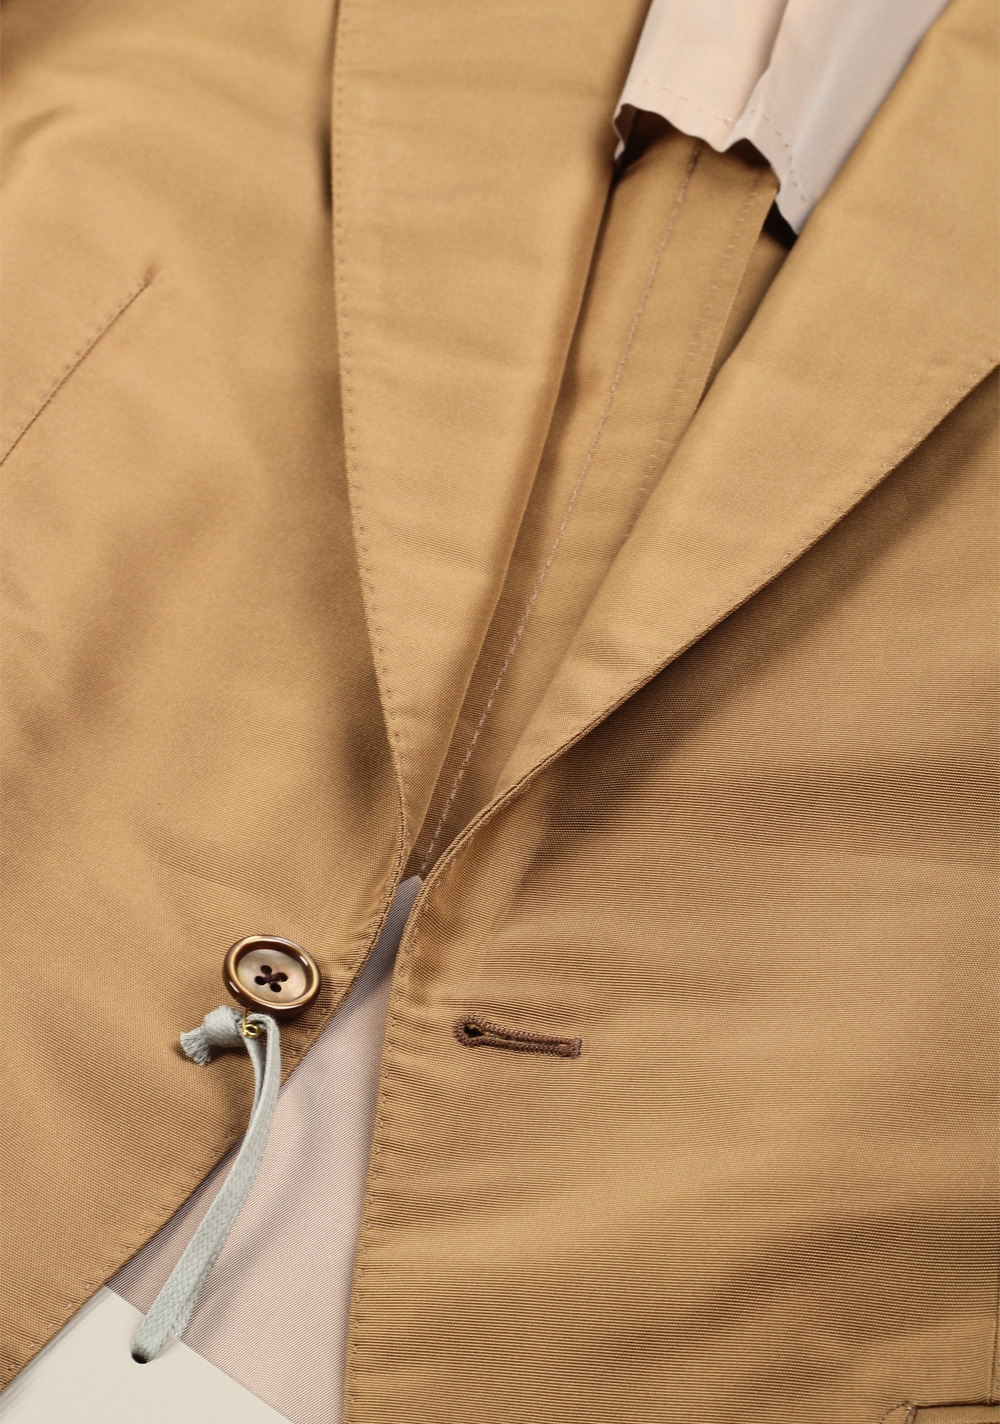 TOM FORD Atticus Beige Silk Sport Coat Size 46 / 36R U.S. | Costume Limité